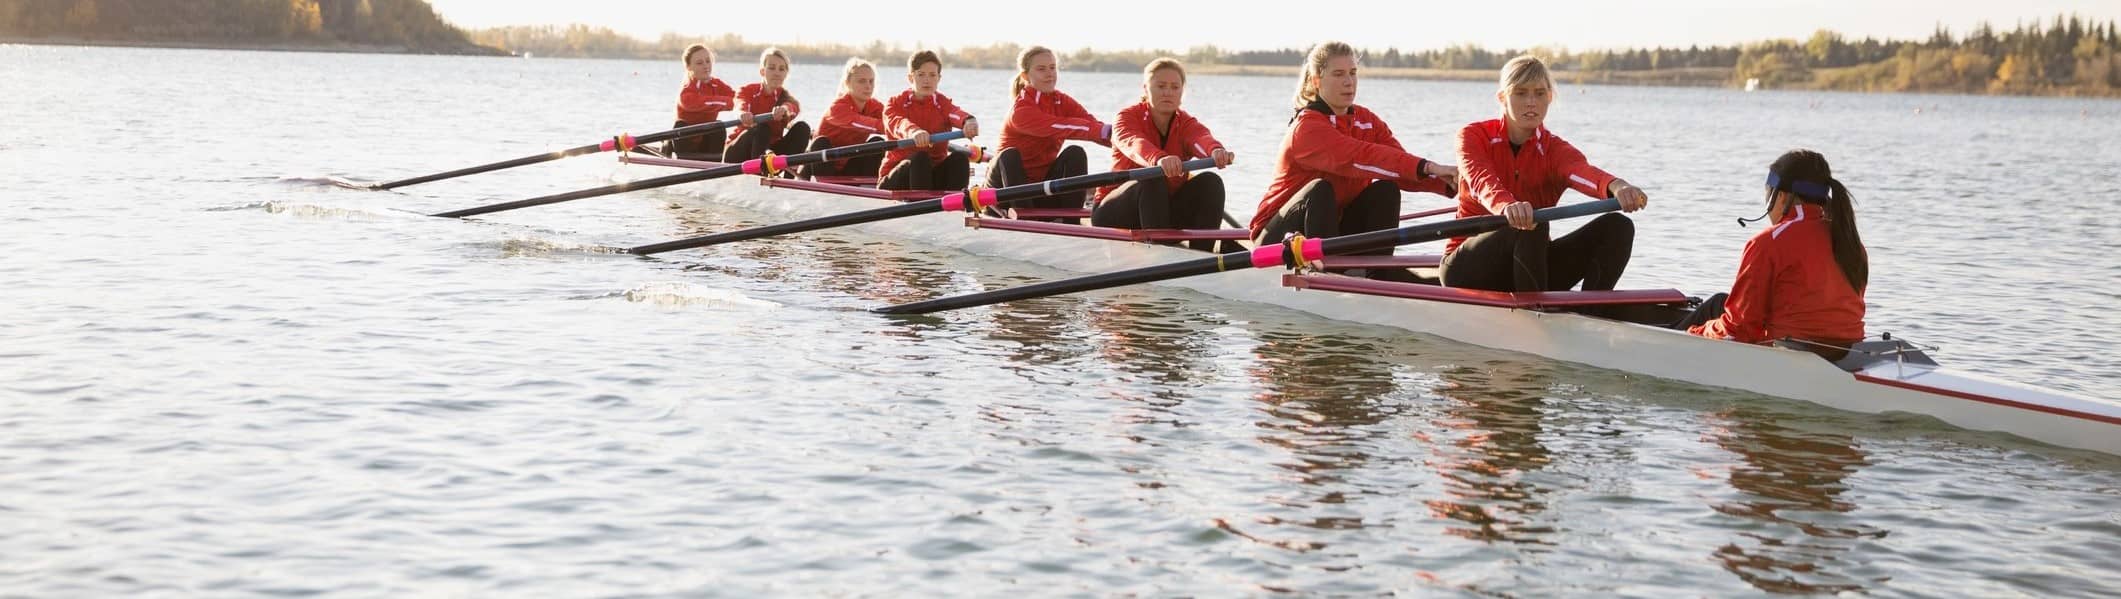 Team of women rowing